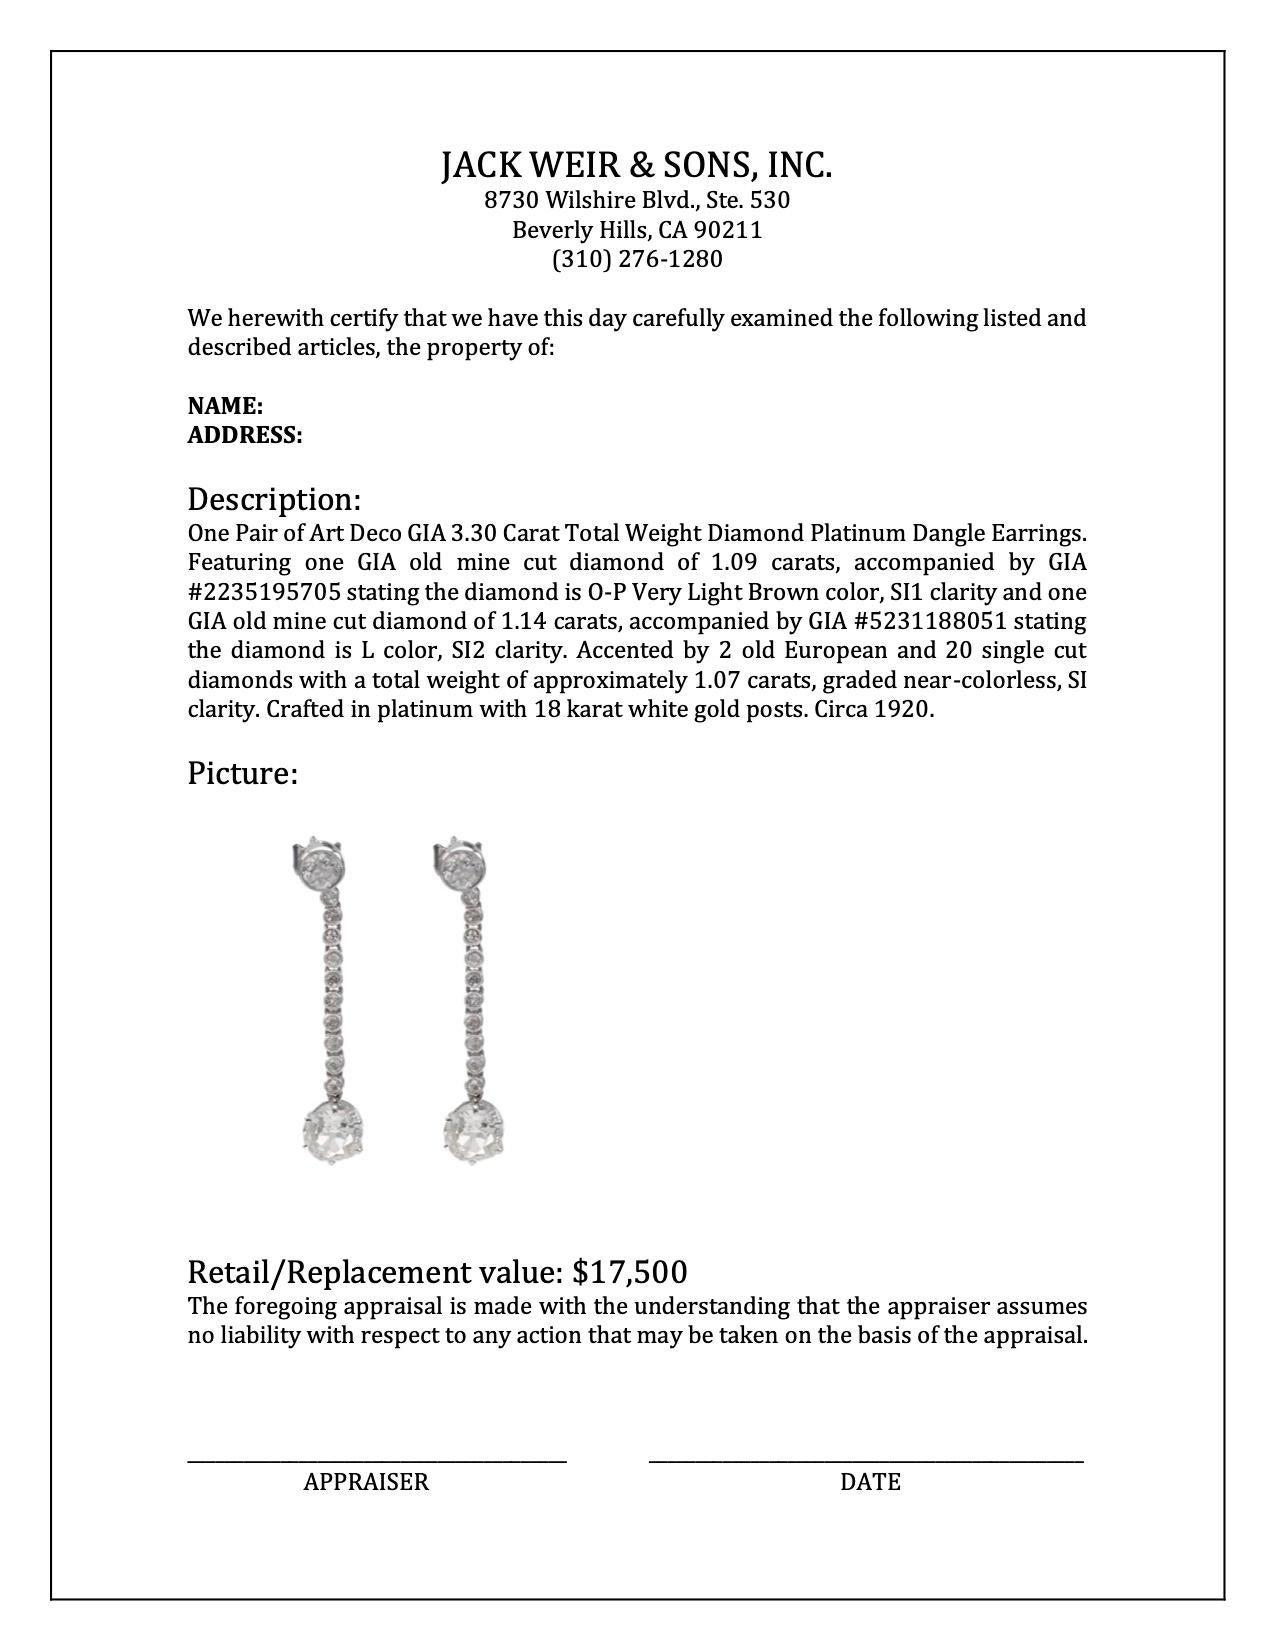 Art Deco GIA 3.30 Carat Total Weight Diamond Platinum Dangle Earrings For Sale 4